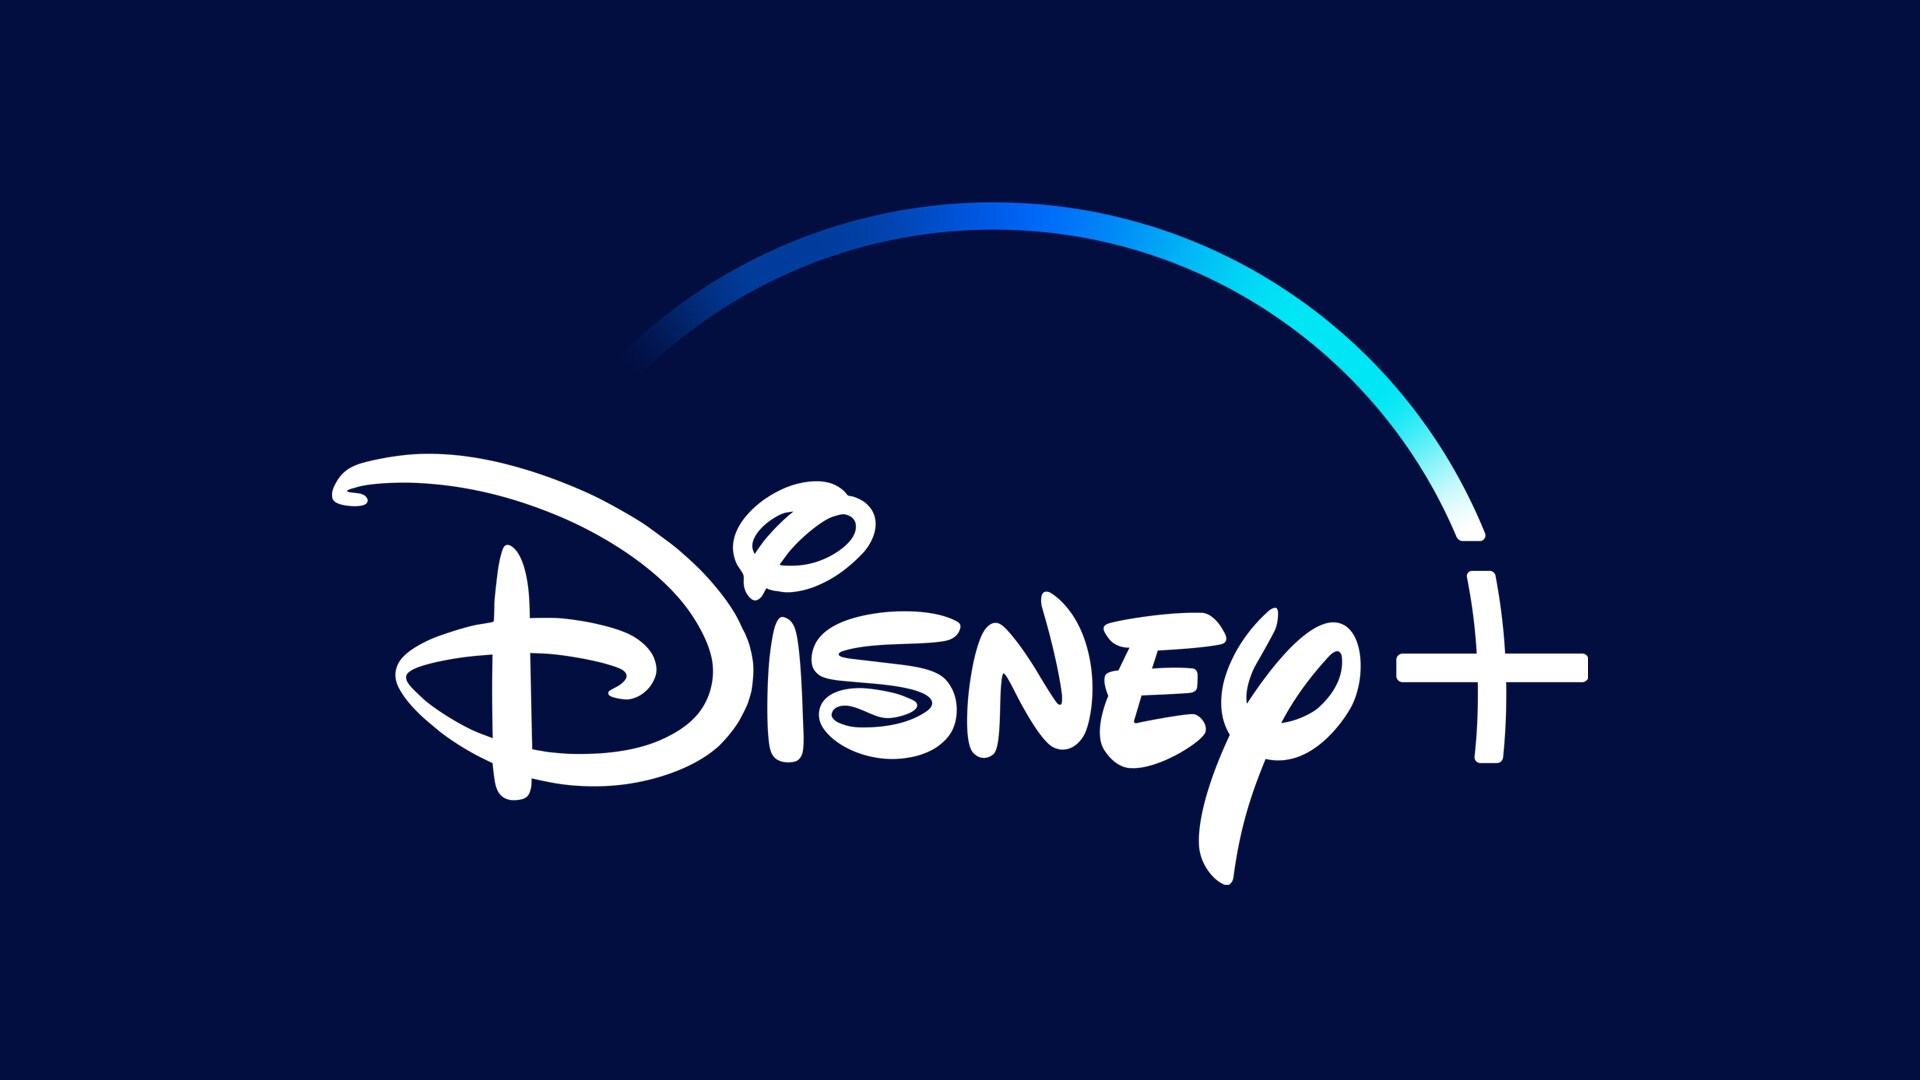 Disney+, la nuova offerta di casa Disney